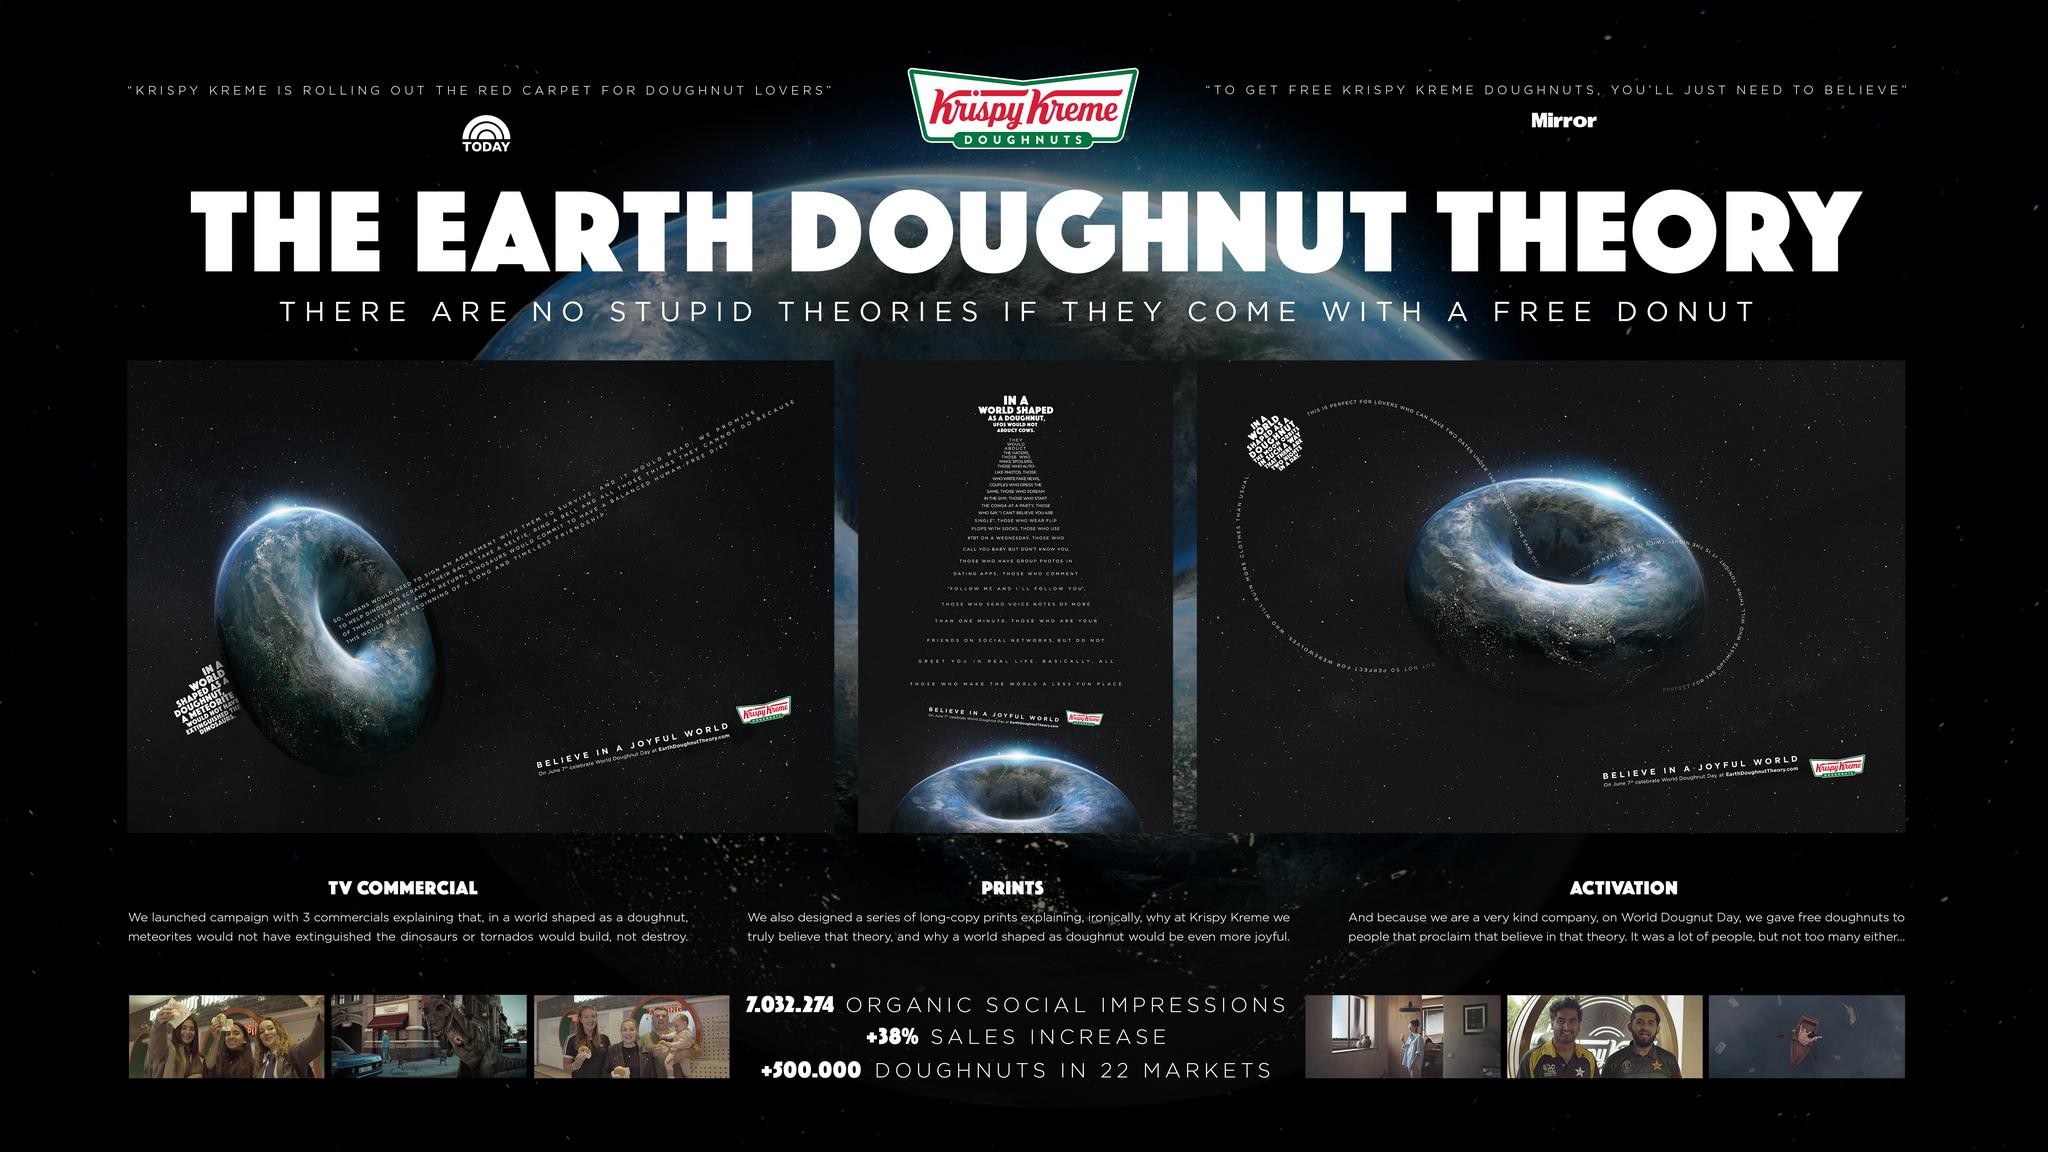 The Earth Doughnut Theory